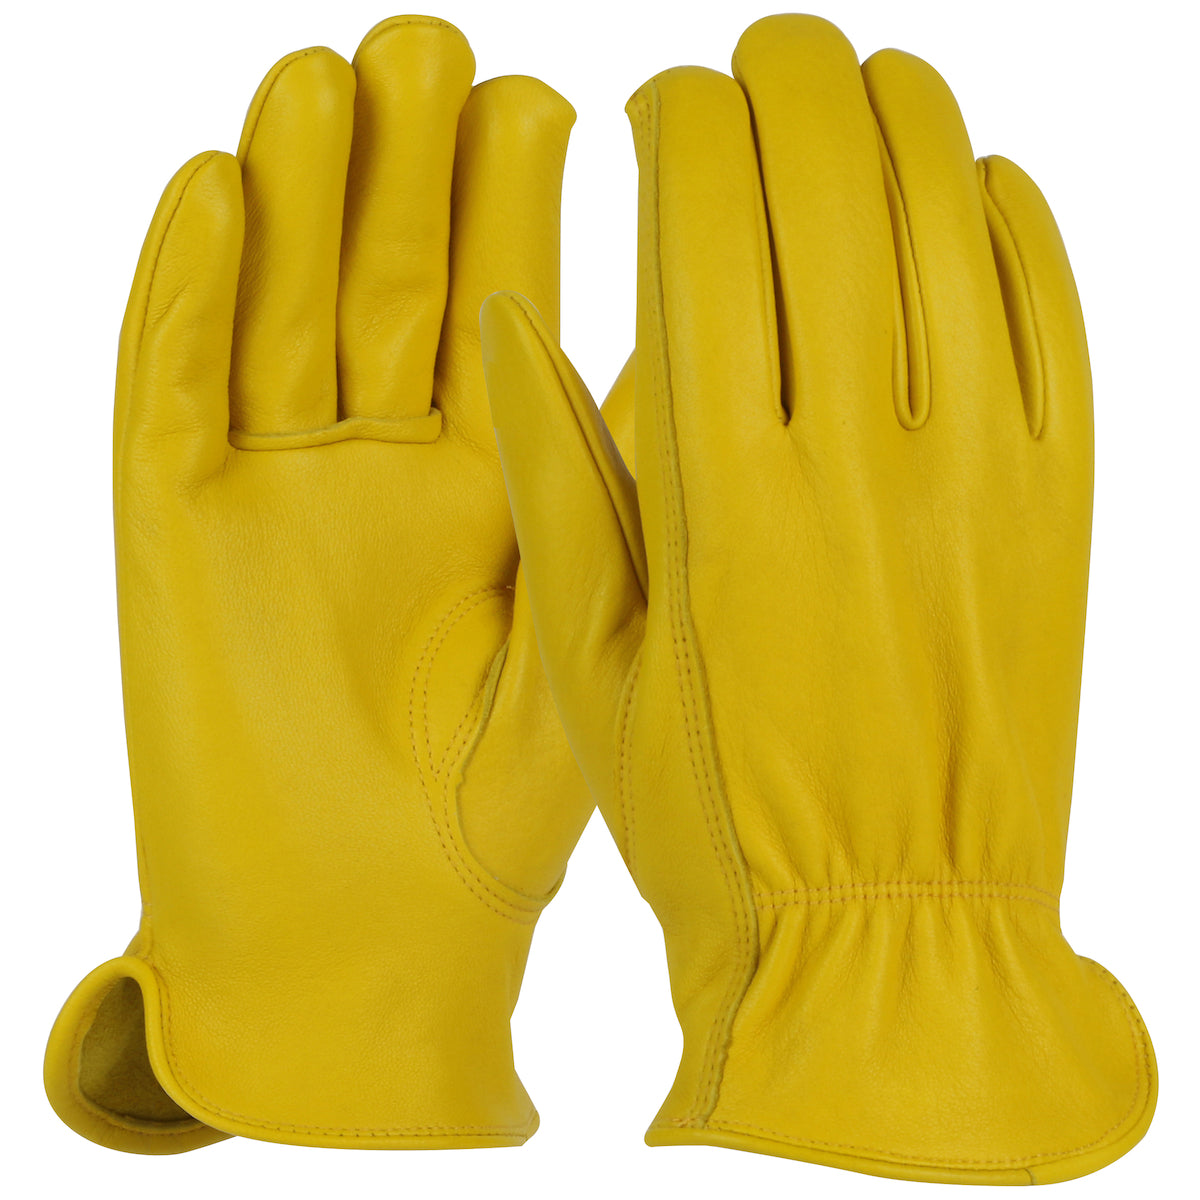 West Chester 9920K/M Premium Grade Top Grain Deerskin Leather Drivers Glove - Keystone Thumb